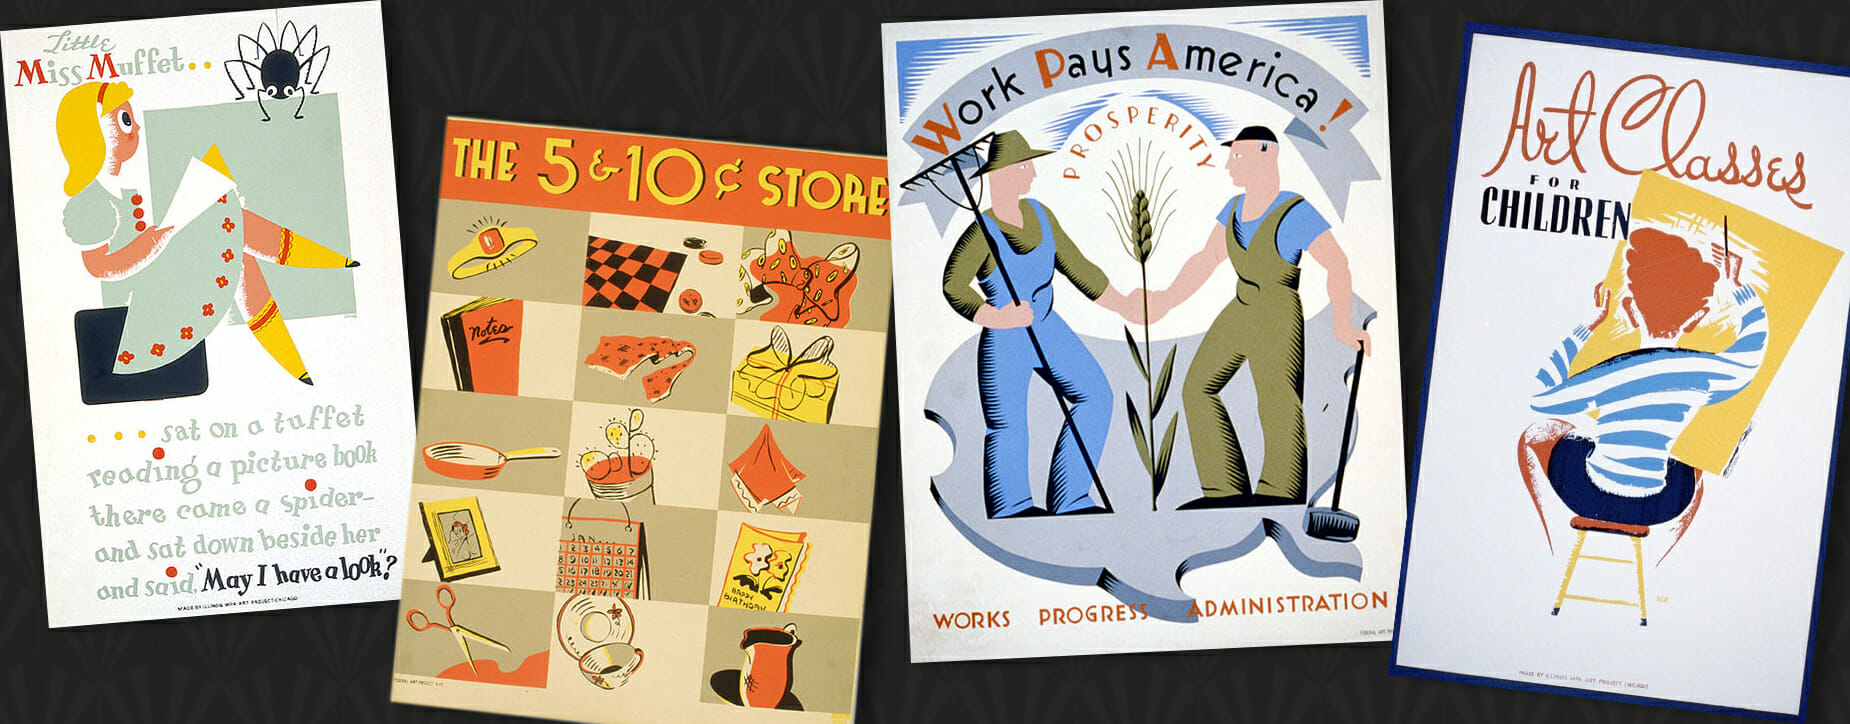 Mid century 1920s US posters